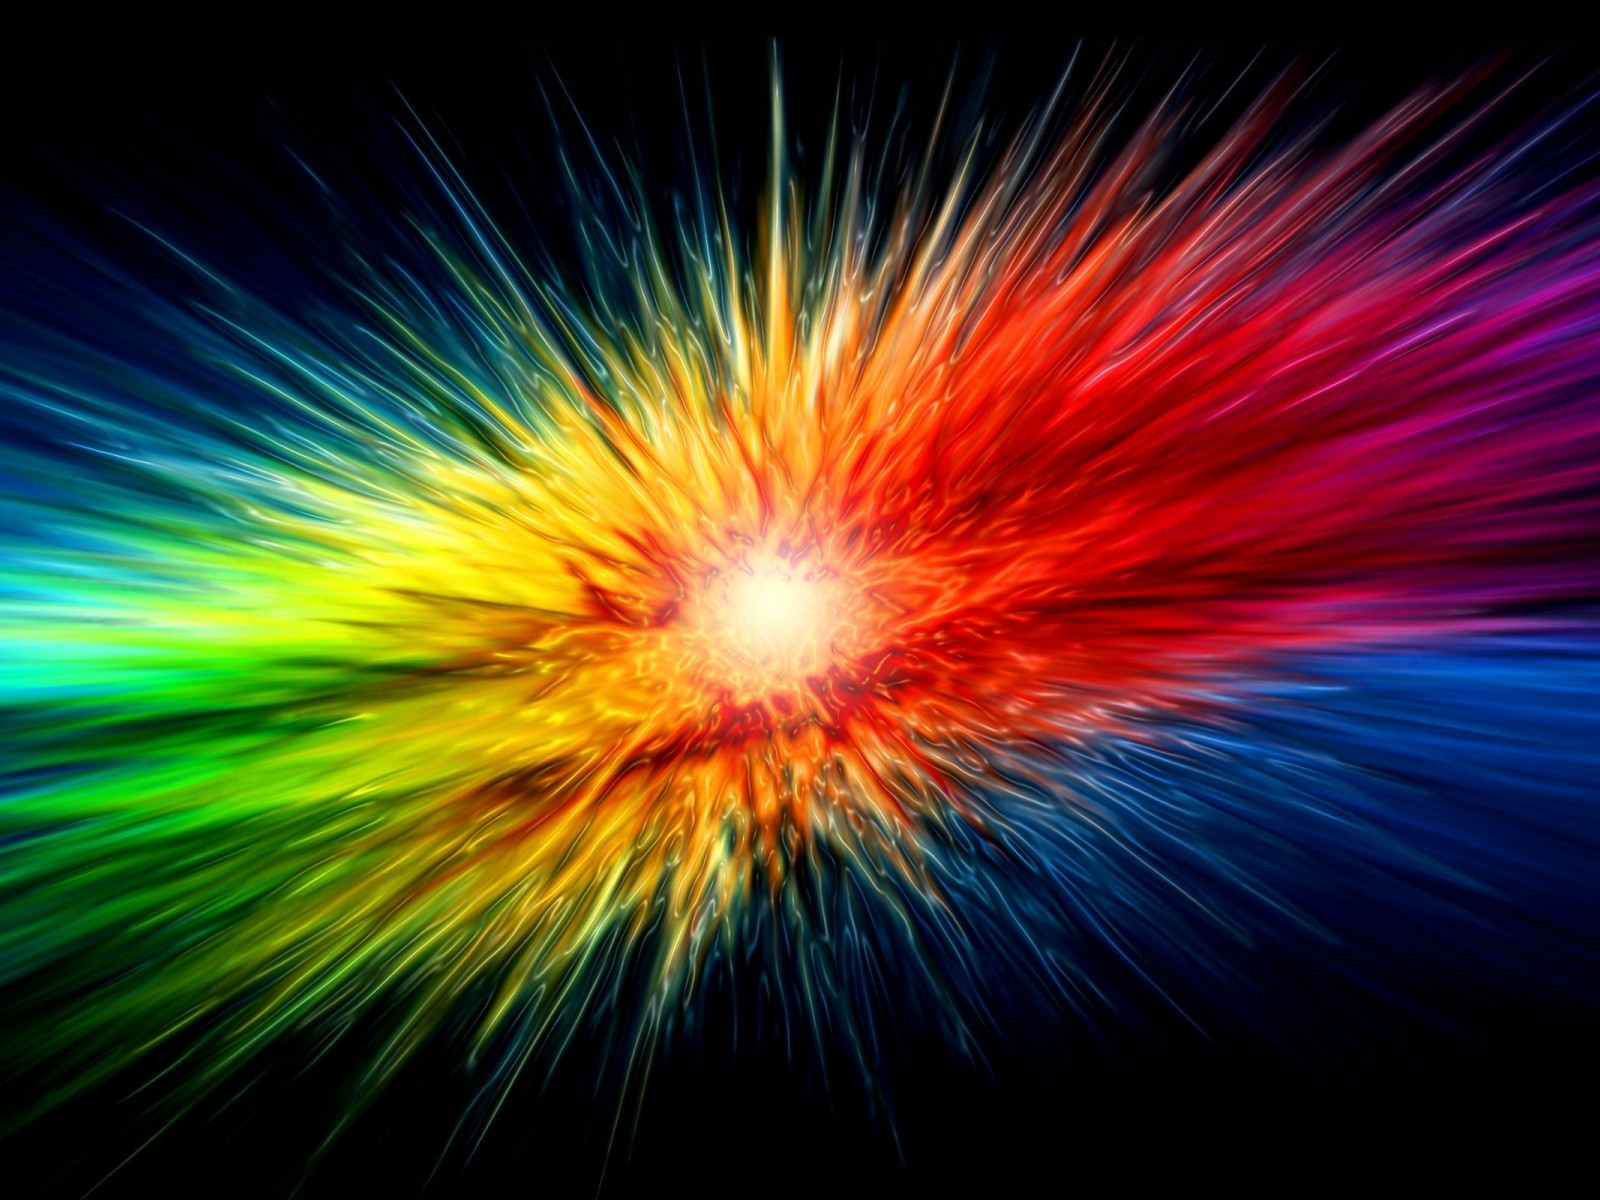 Supernova Rainbow Explosion Standard Image Abstract 3d